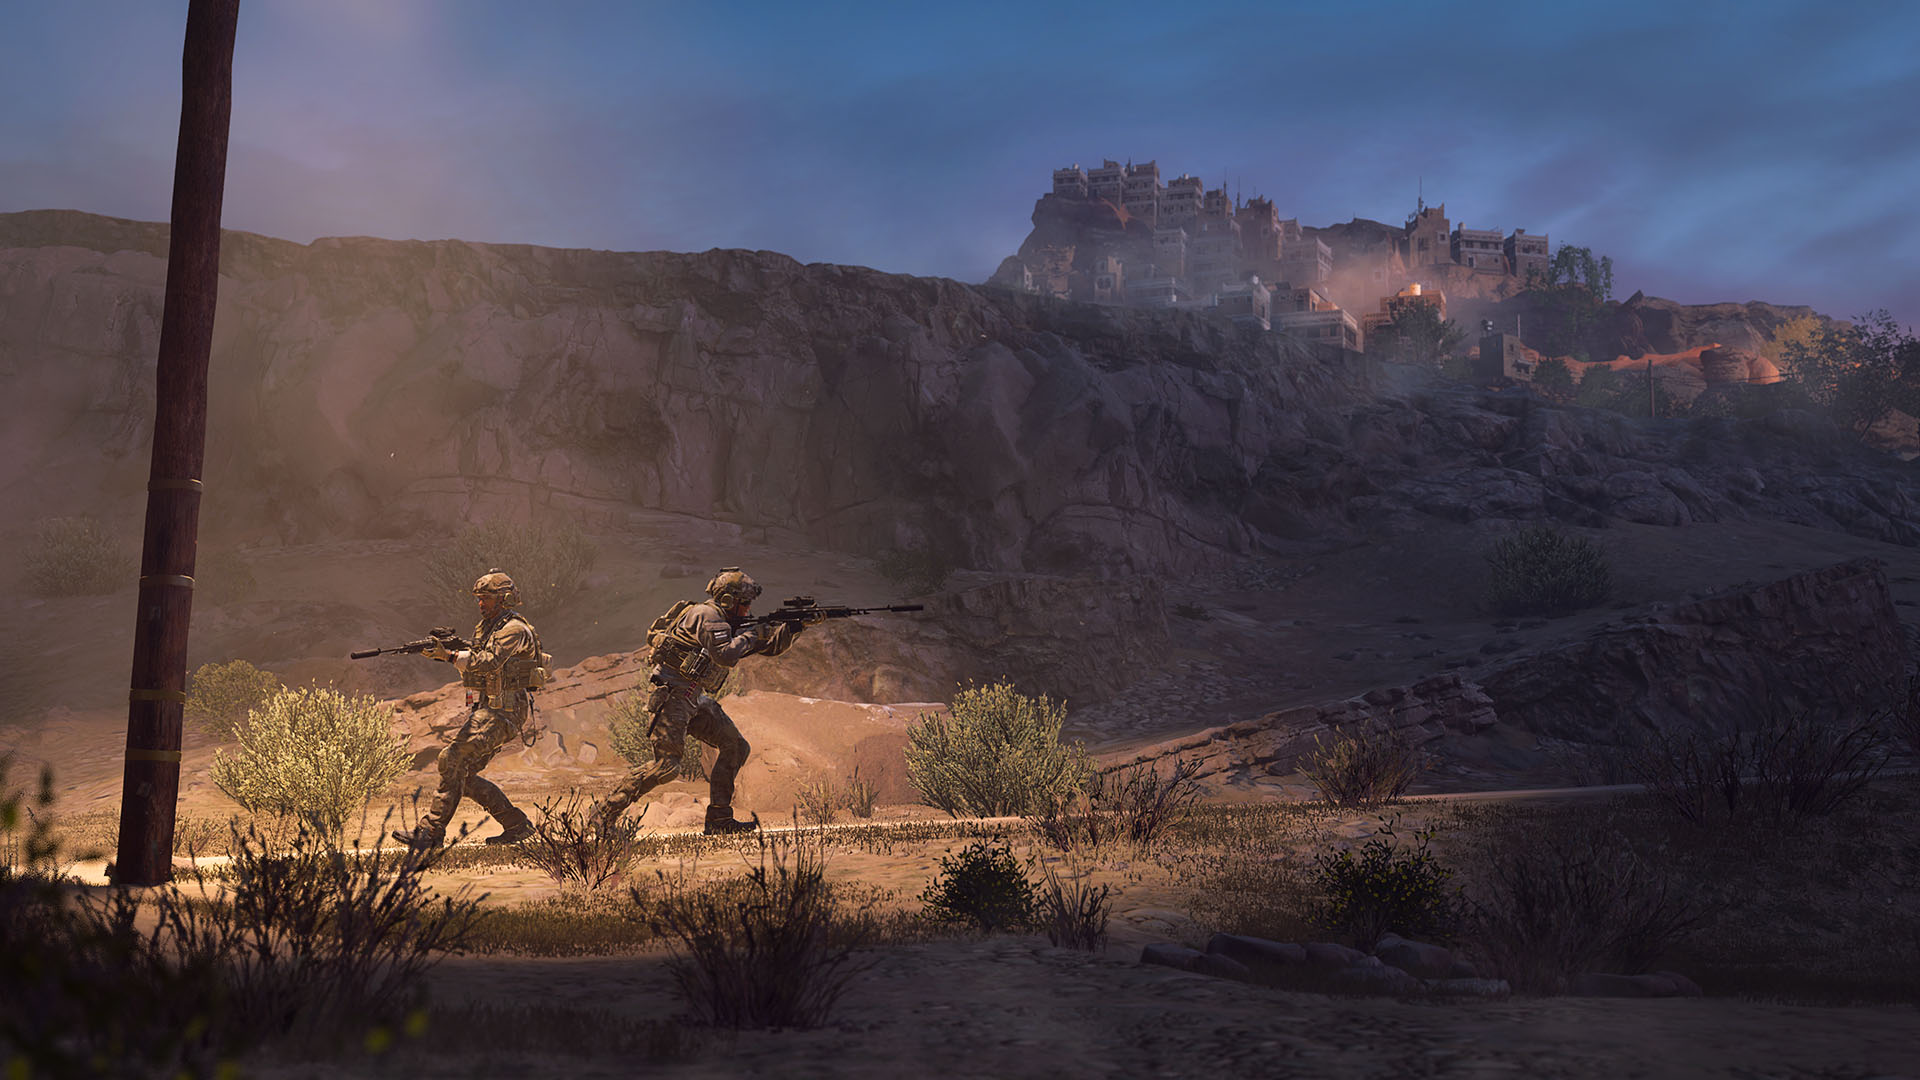 Call of Duty: Modern Warfare 2 - Cross-Gen Bundle Xbox Series X|S Xbox One  